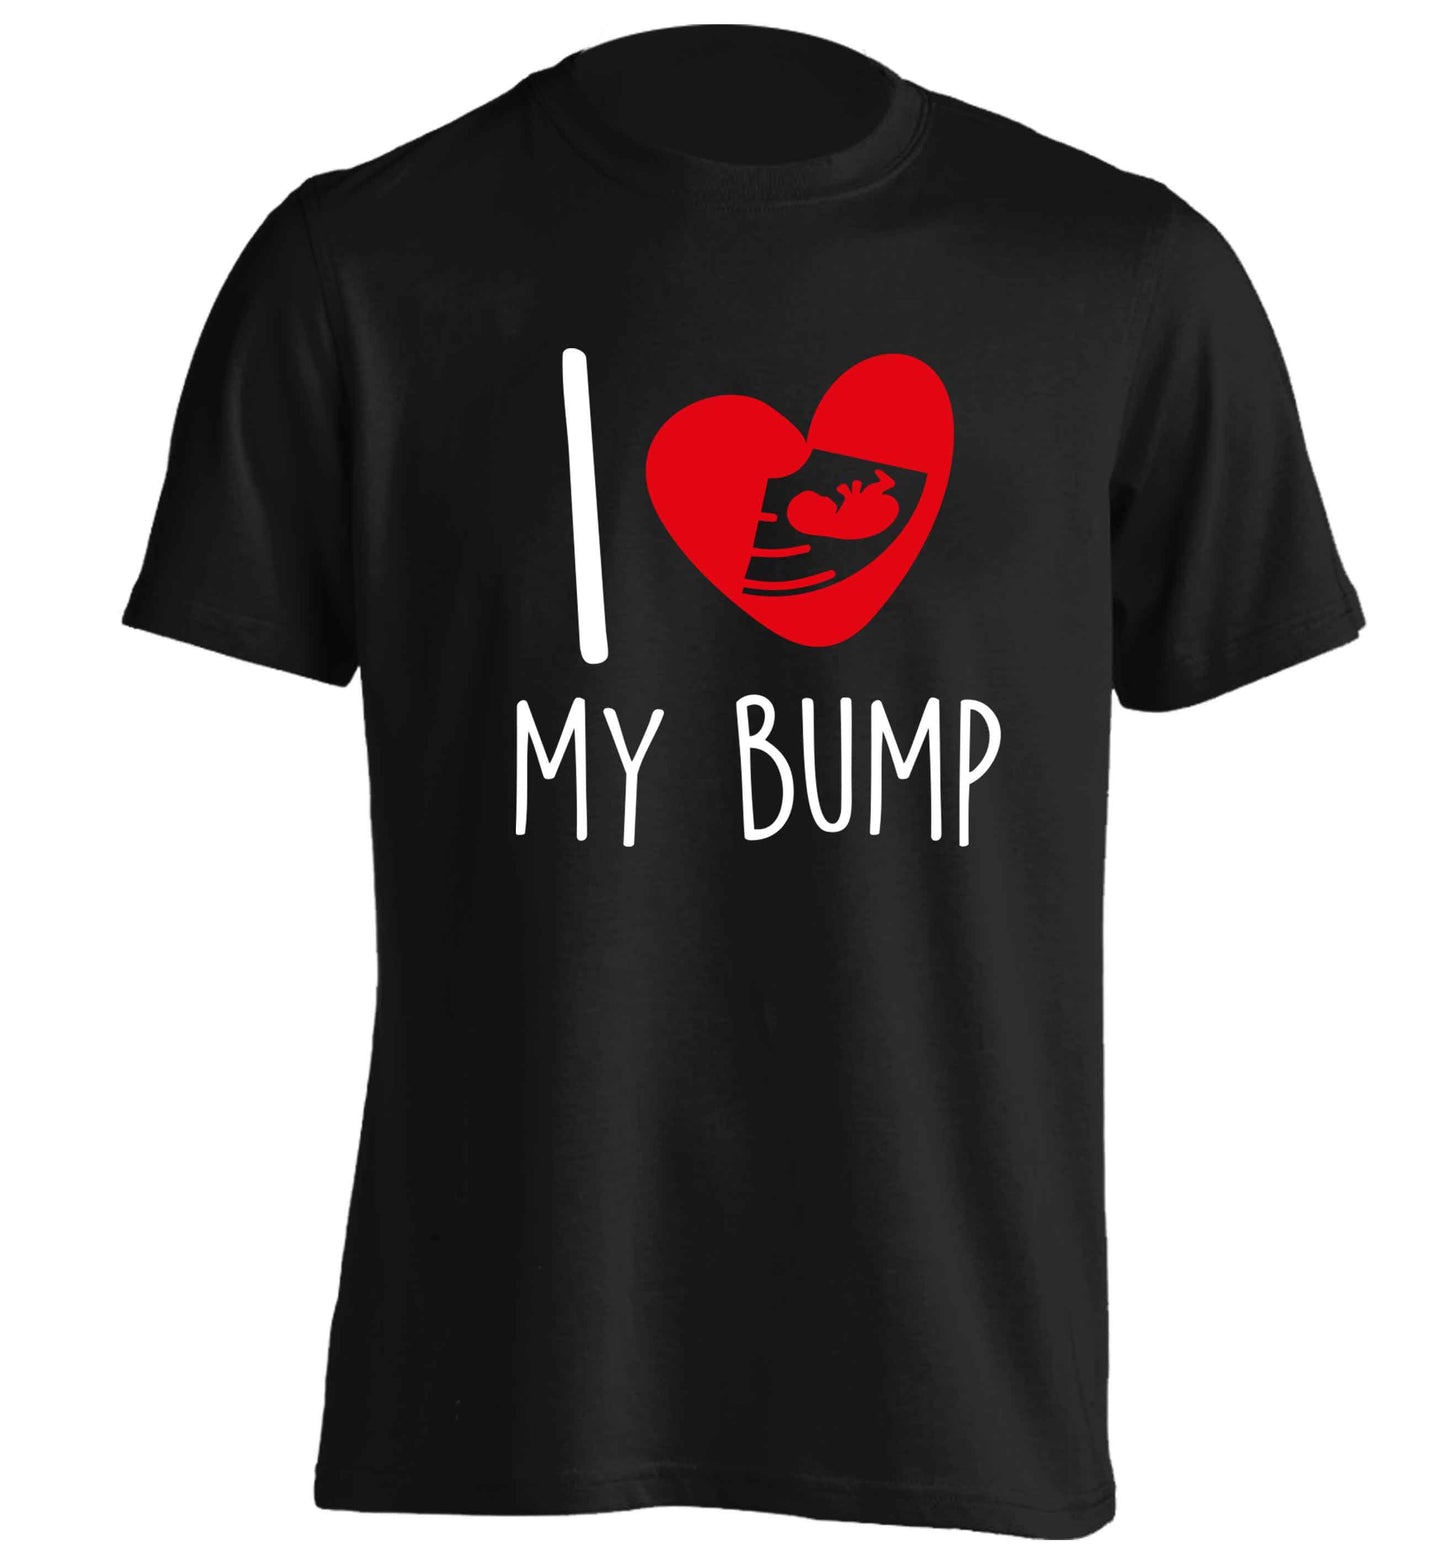 I love my bump adults unisex black Tshirt 2XL